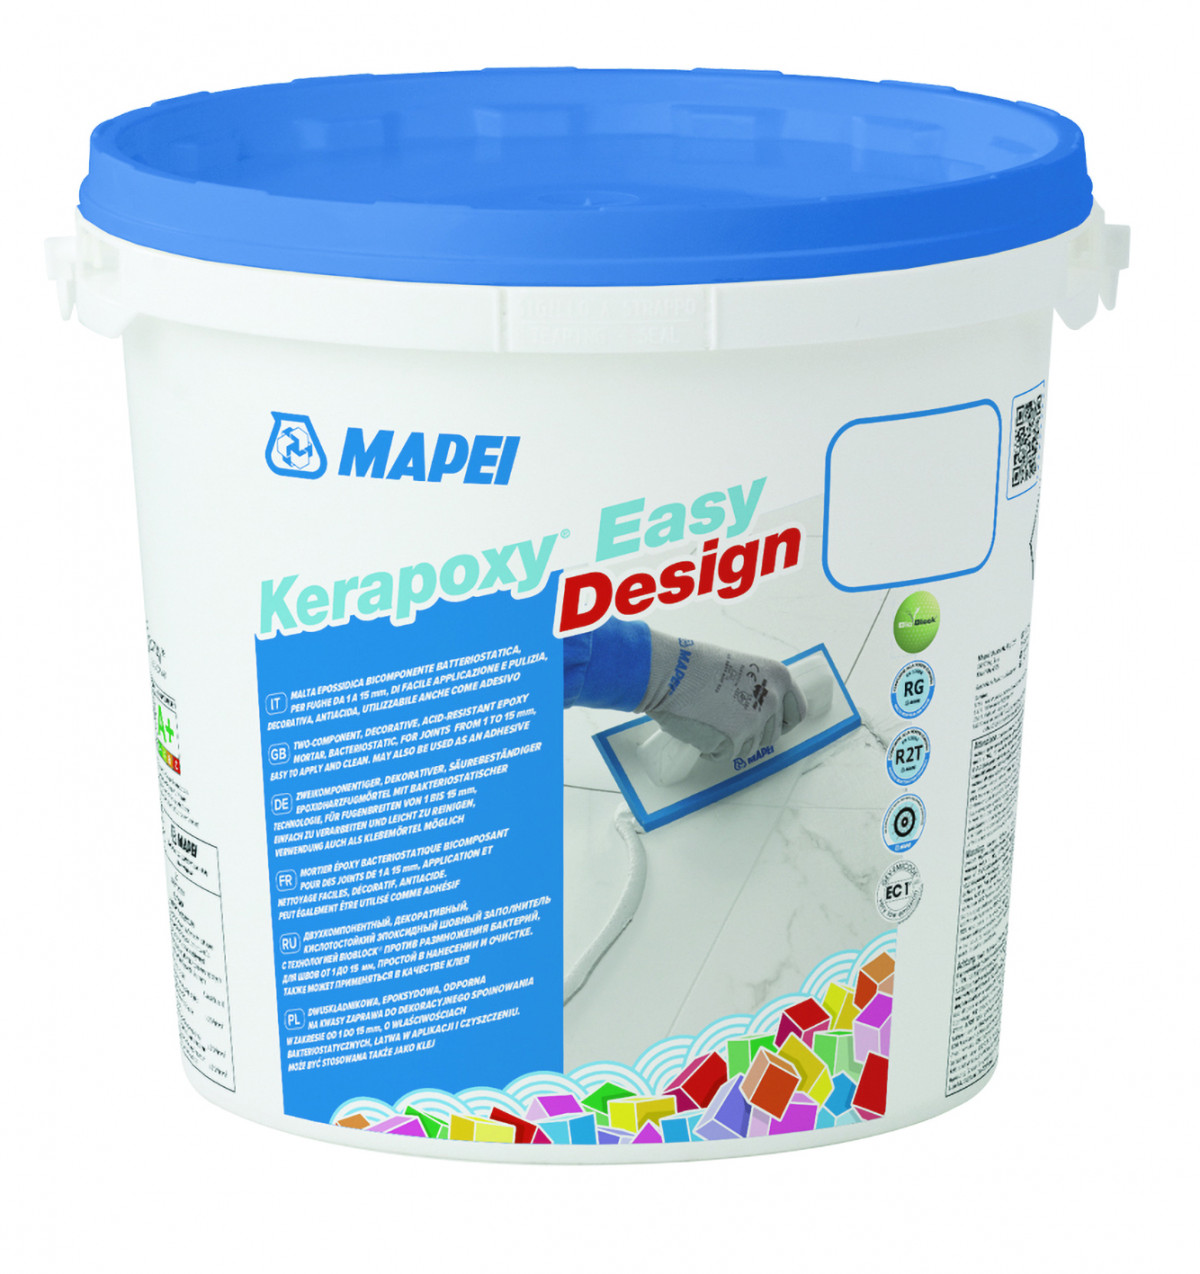 Kerapoxy Easy Design 103 Holdfehér 3 kg